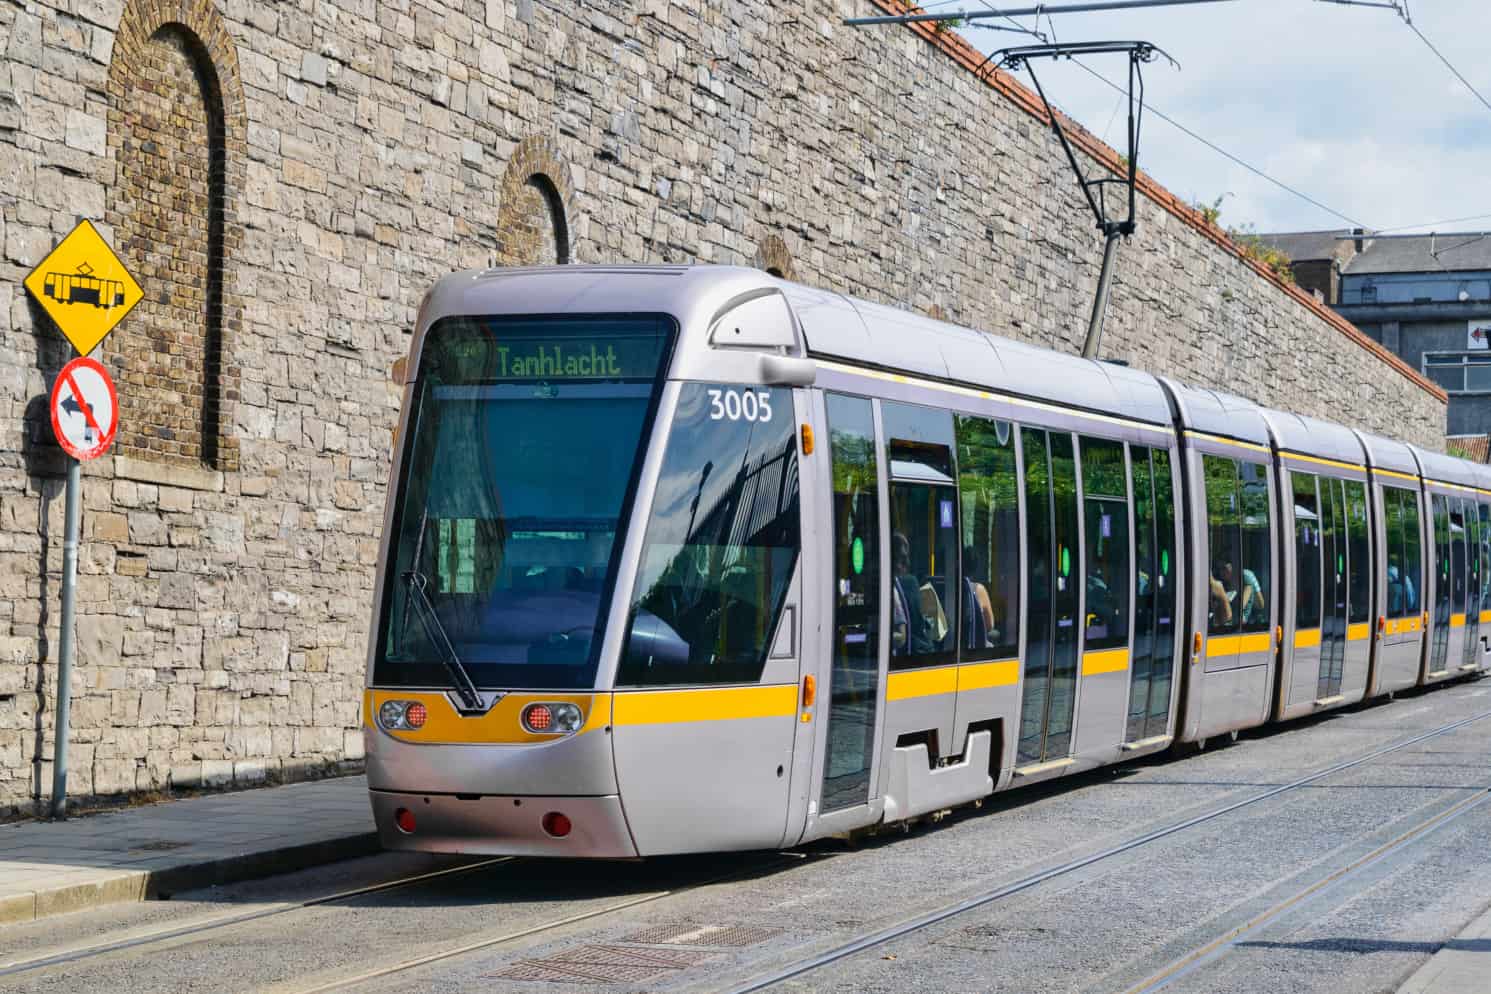 The Luas tram in Dublin